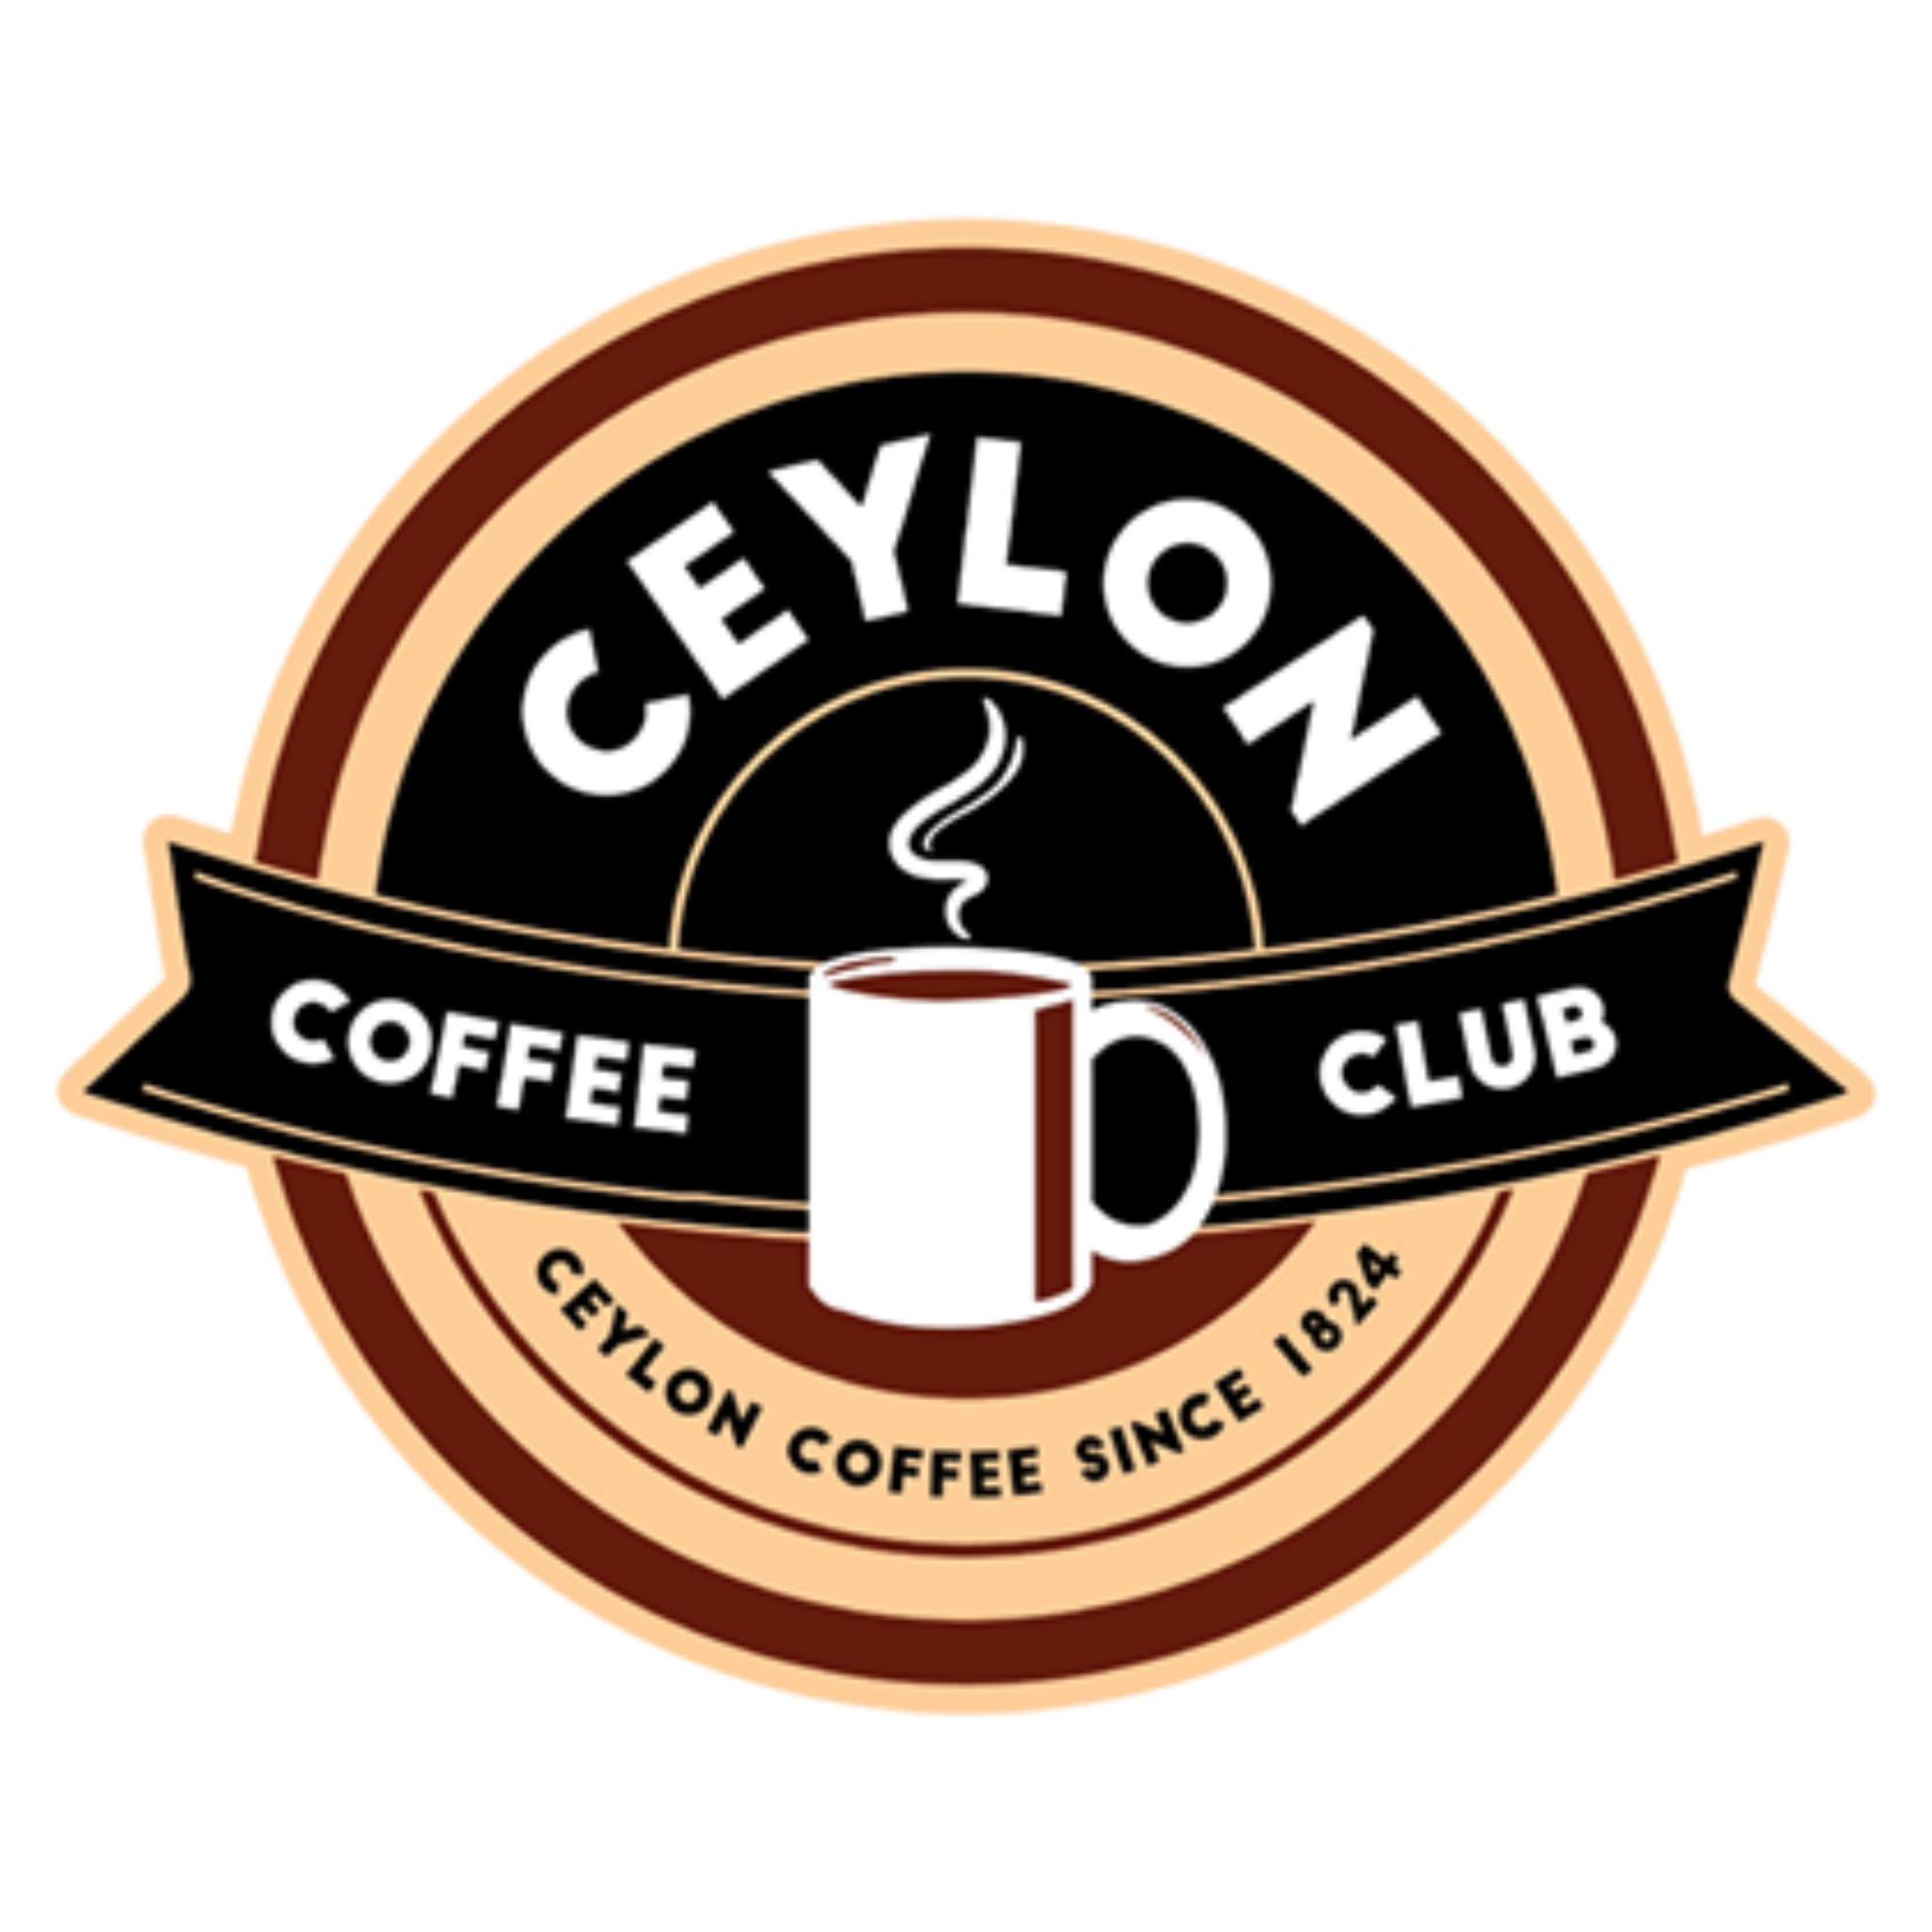 Ceylon Coffee Club - Araneta City